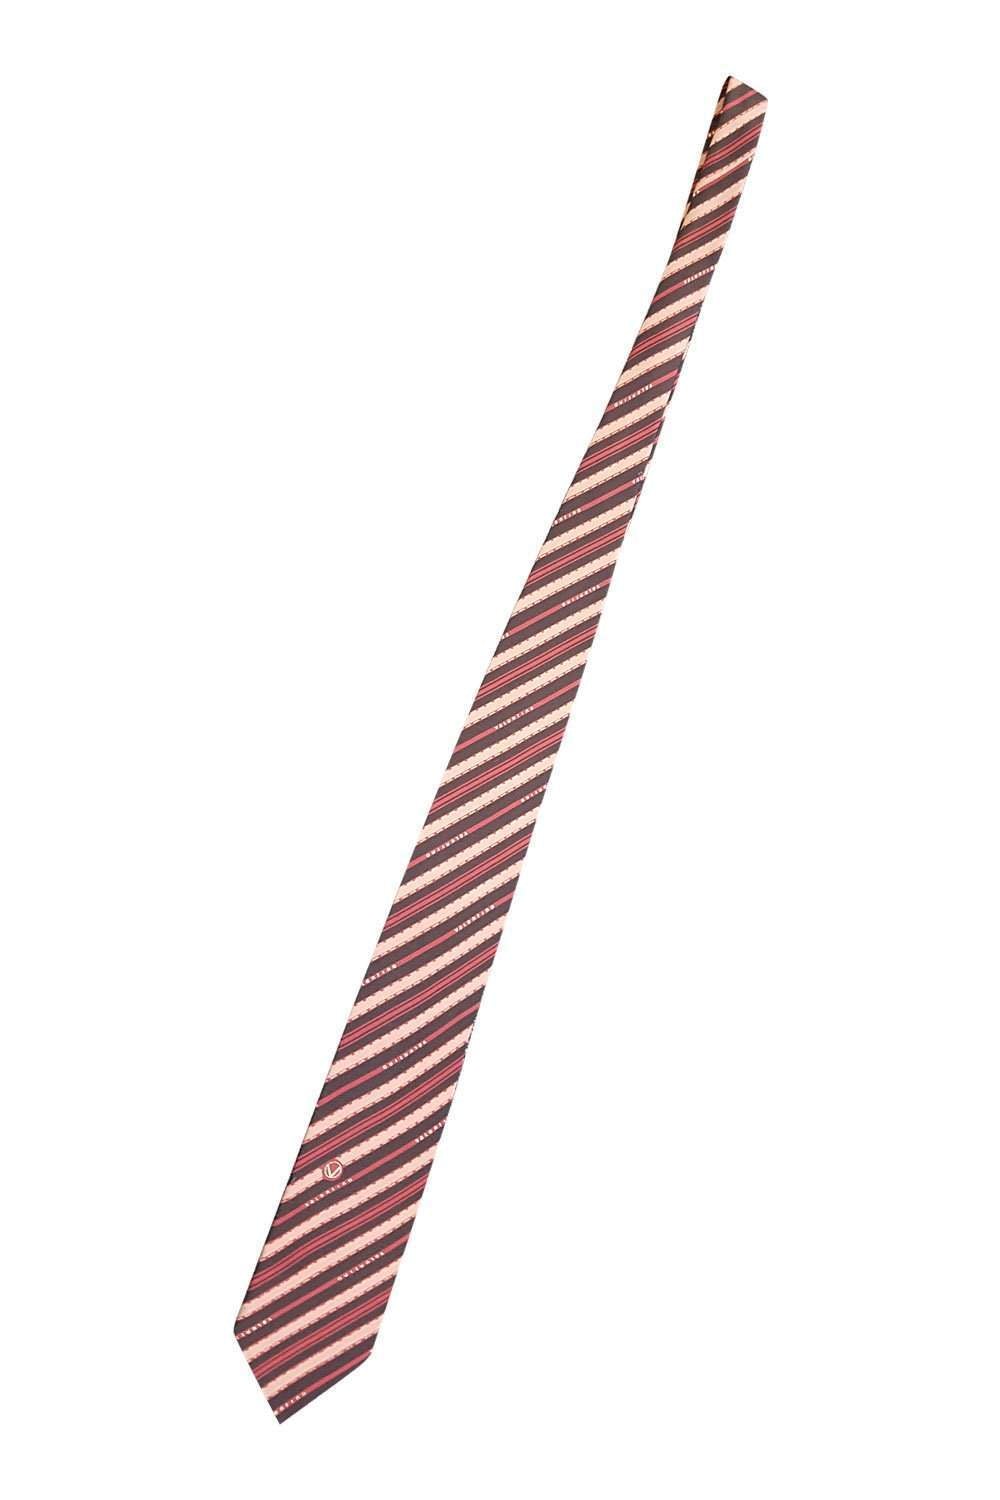 VALENTINO Vintage Silk Brown Red Cream Stripe Tie-Valentino-The Freperie